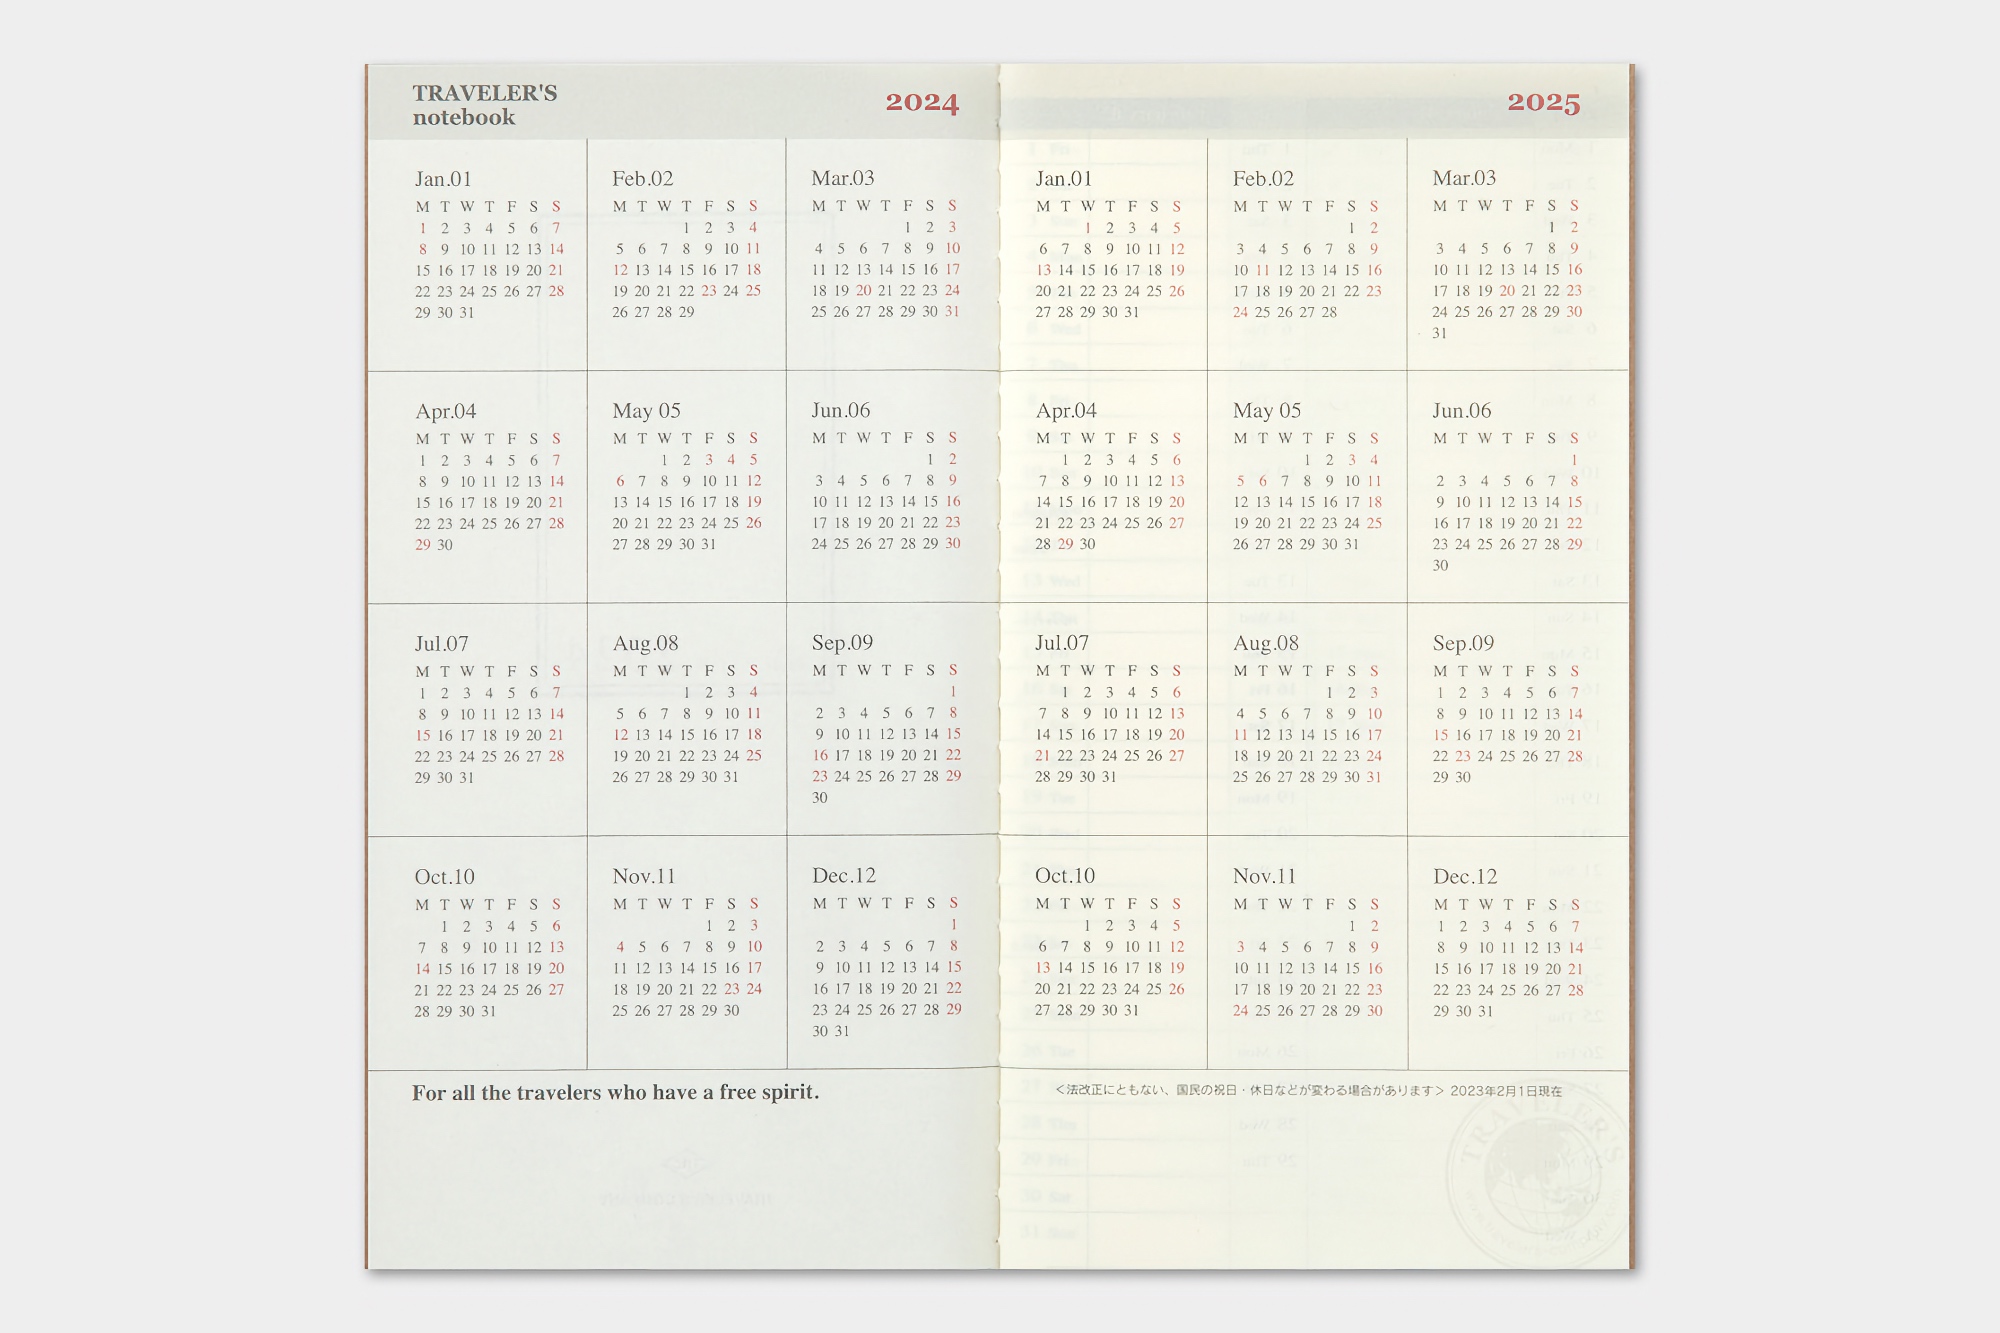 Traveler’s Company Traveler's notebook - 2024 Weekly + Vertical Refill, Regular Size